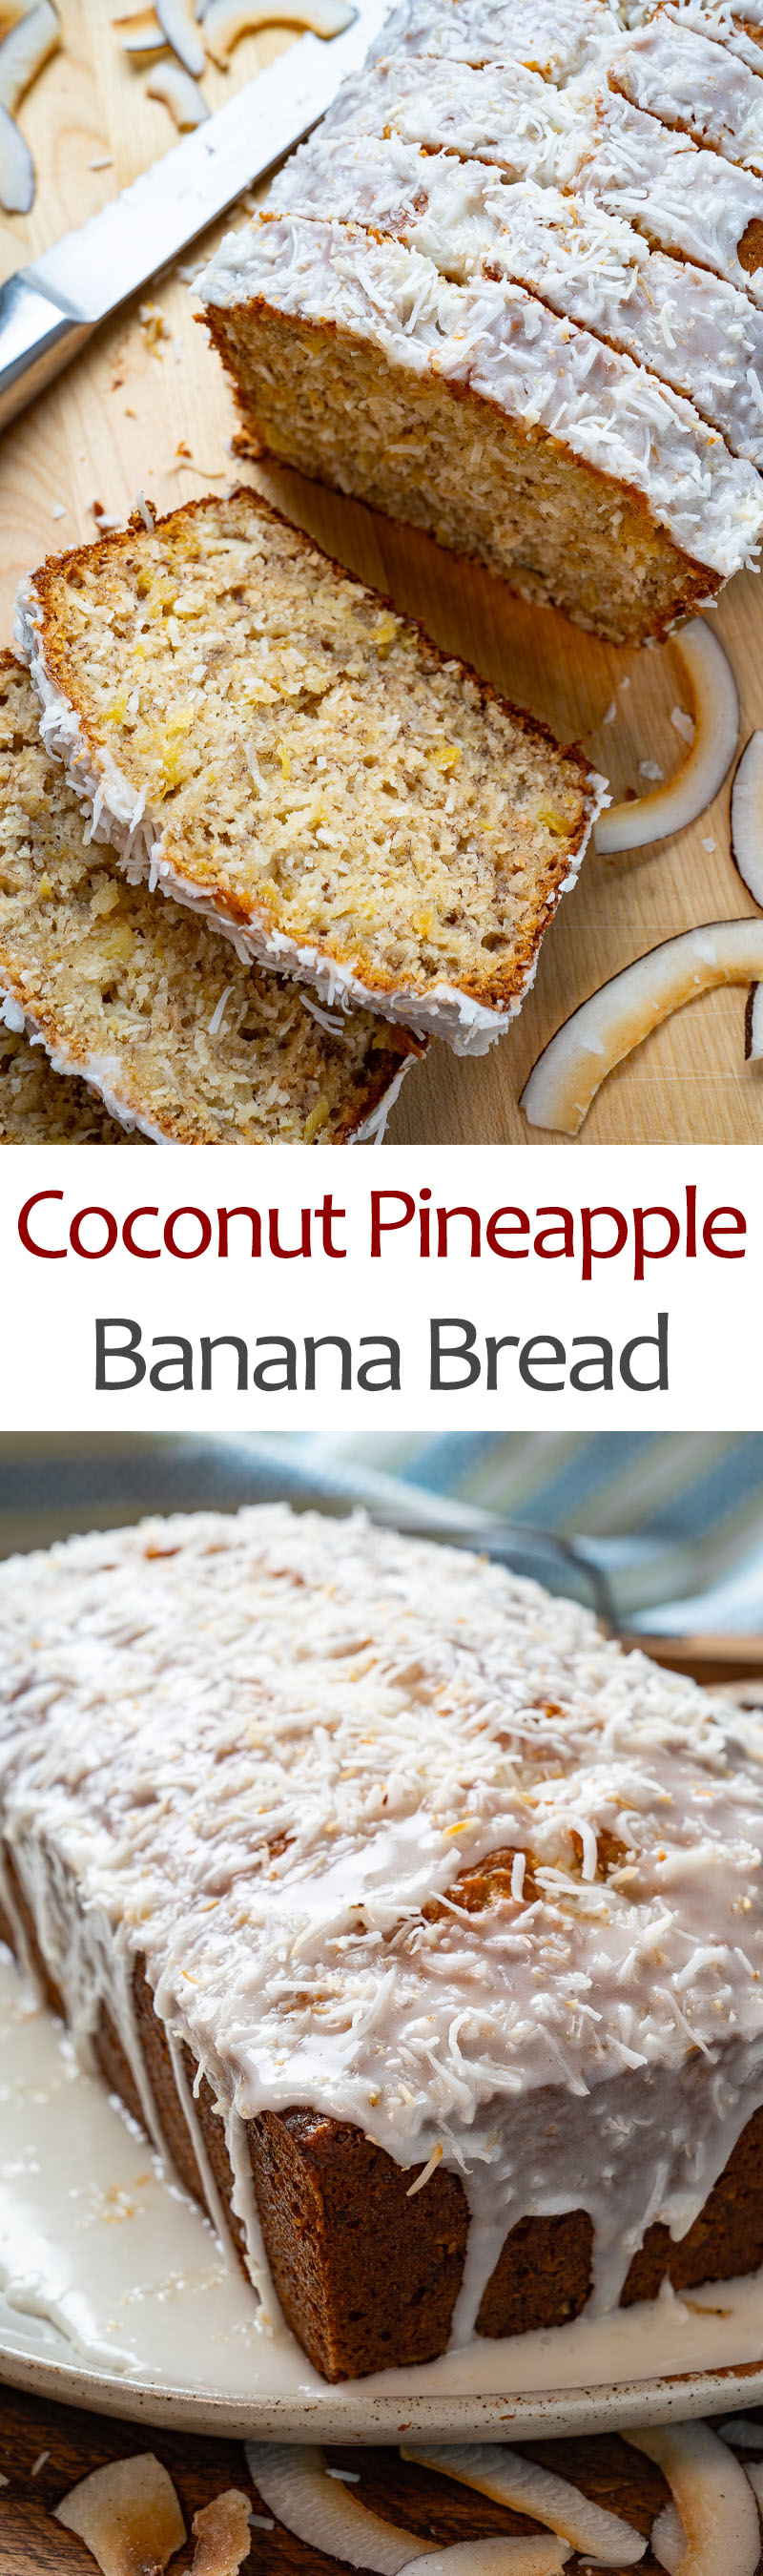 Coconut Pineapple Banana Bread